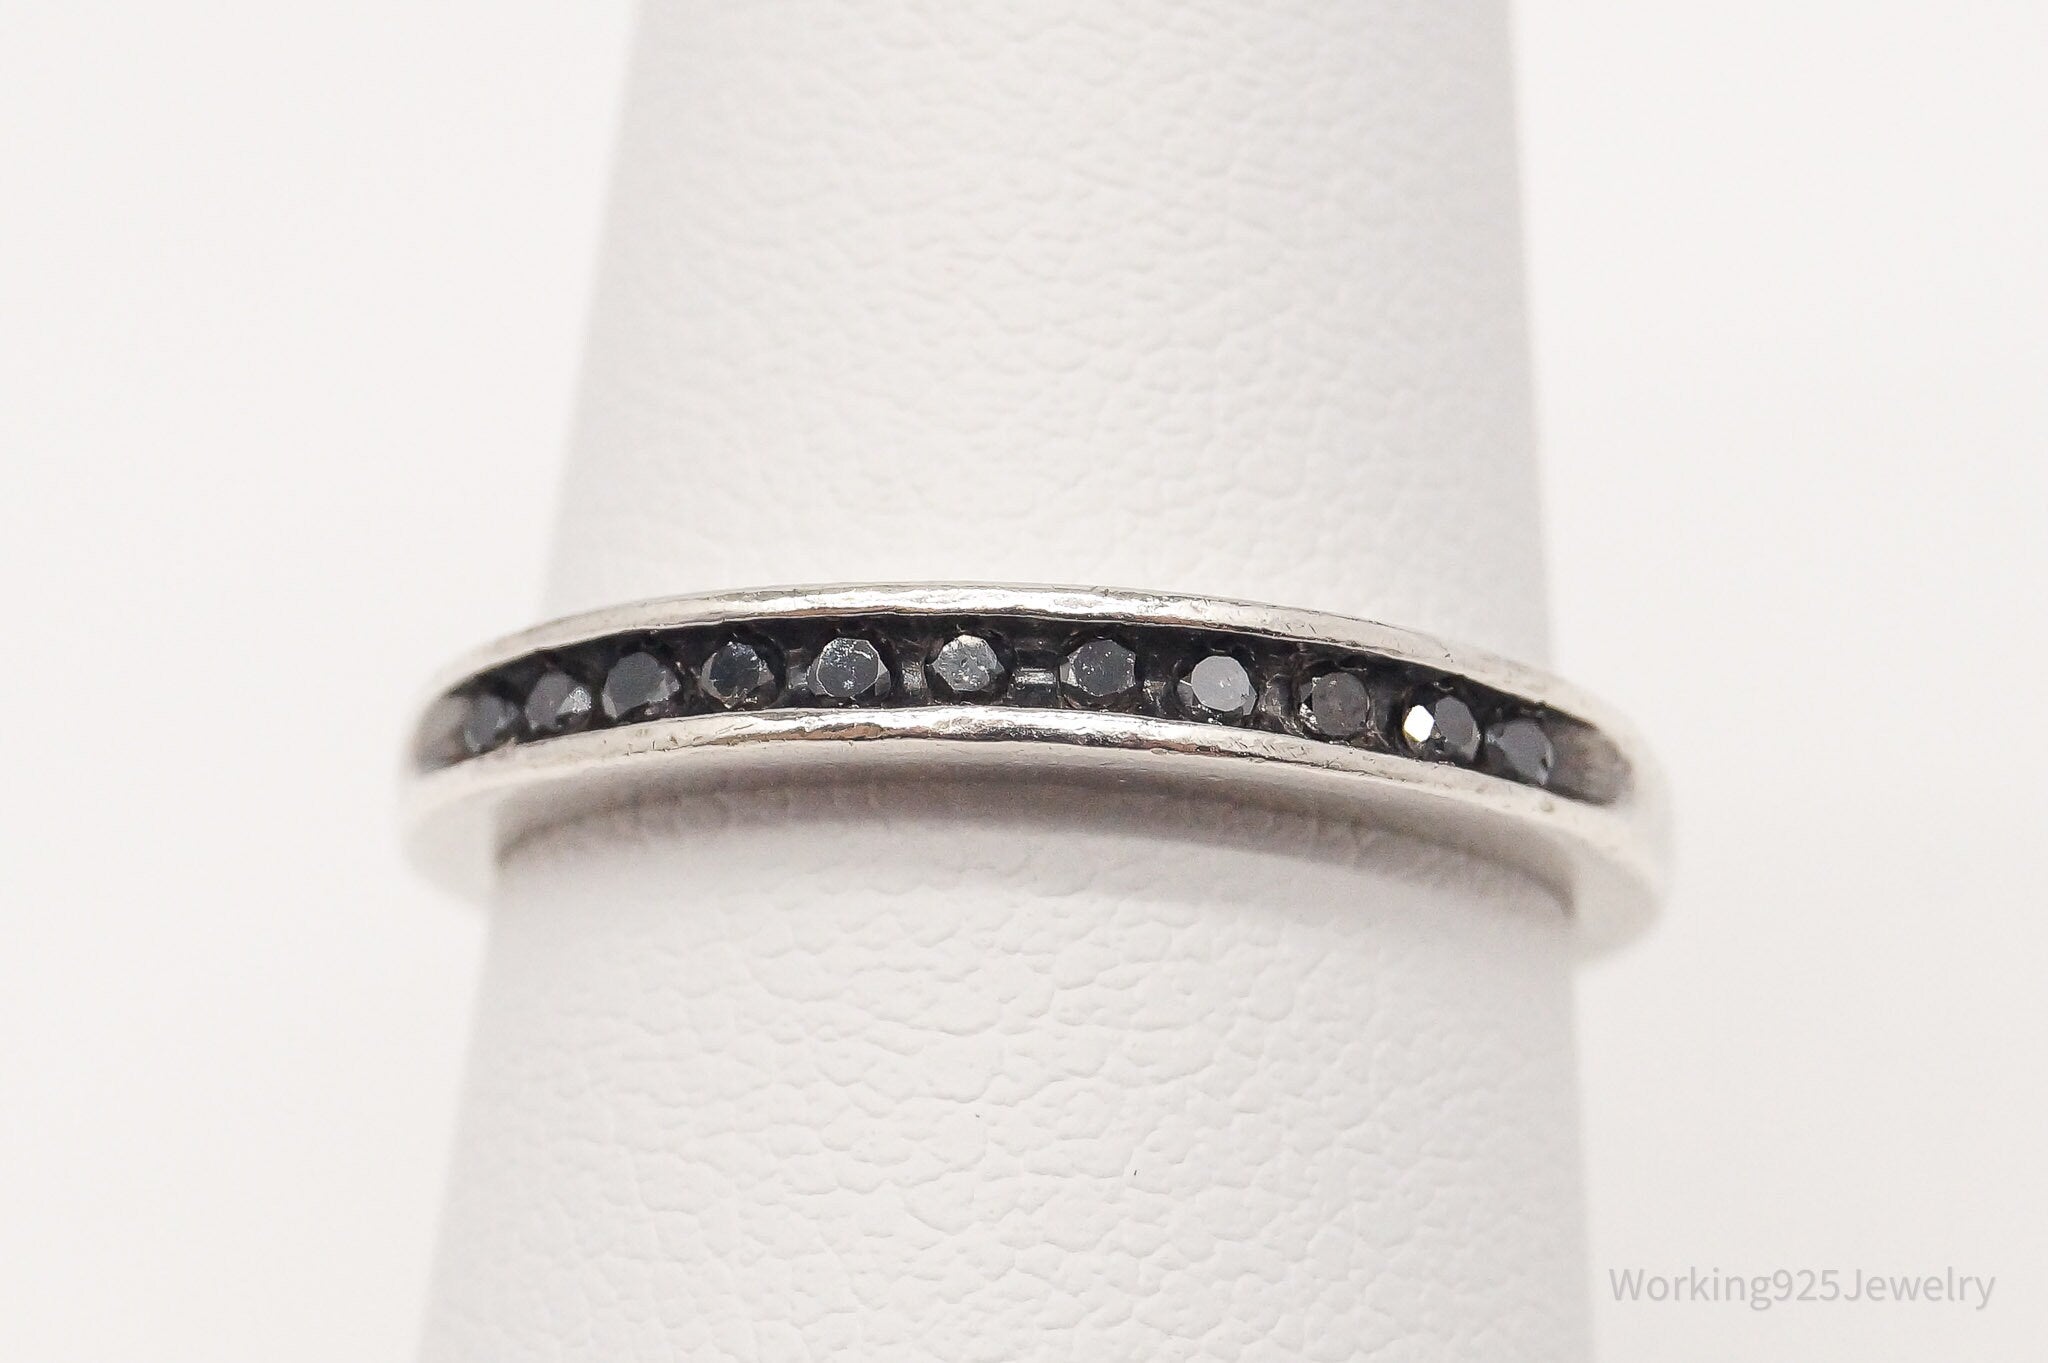 Vintage Black Diamond Sterling Silver Ring - Size 6.25